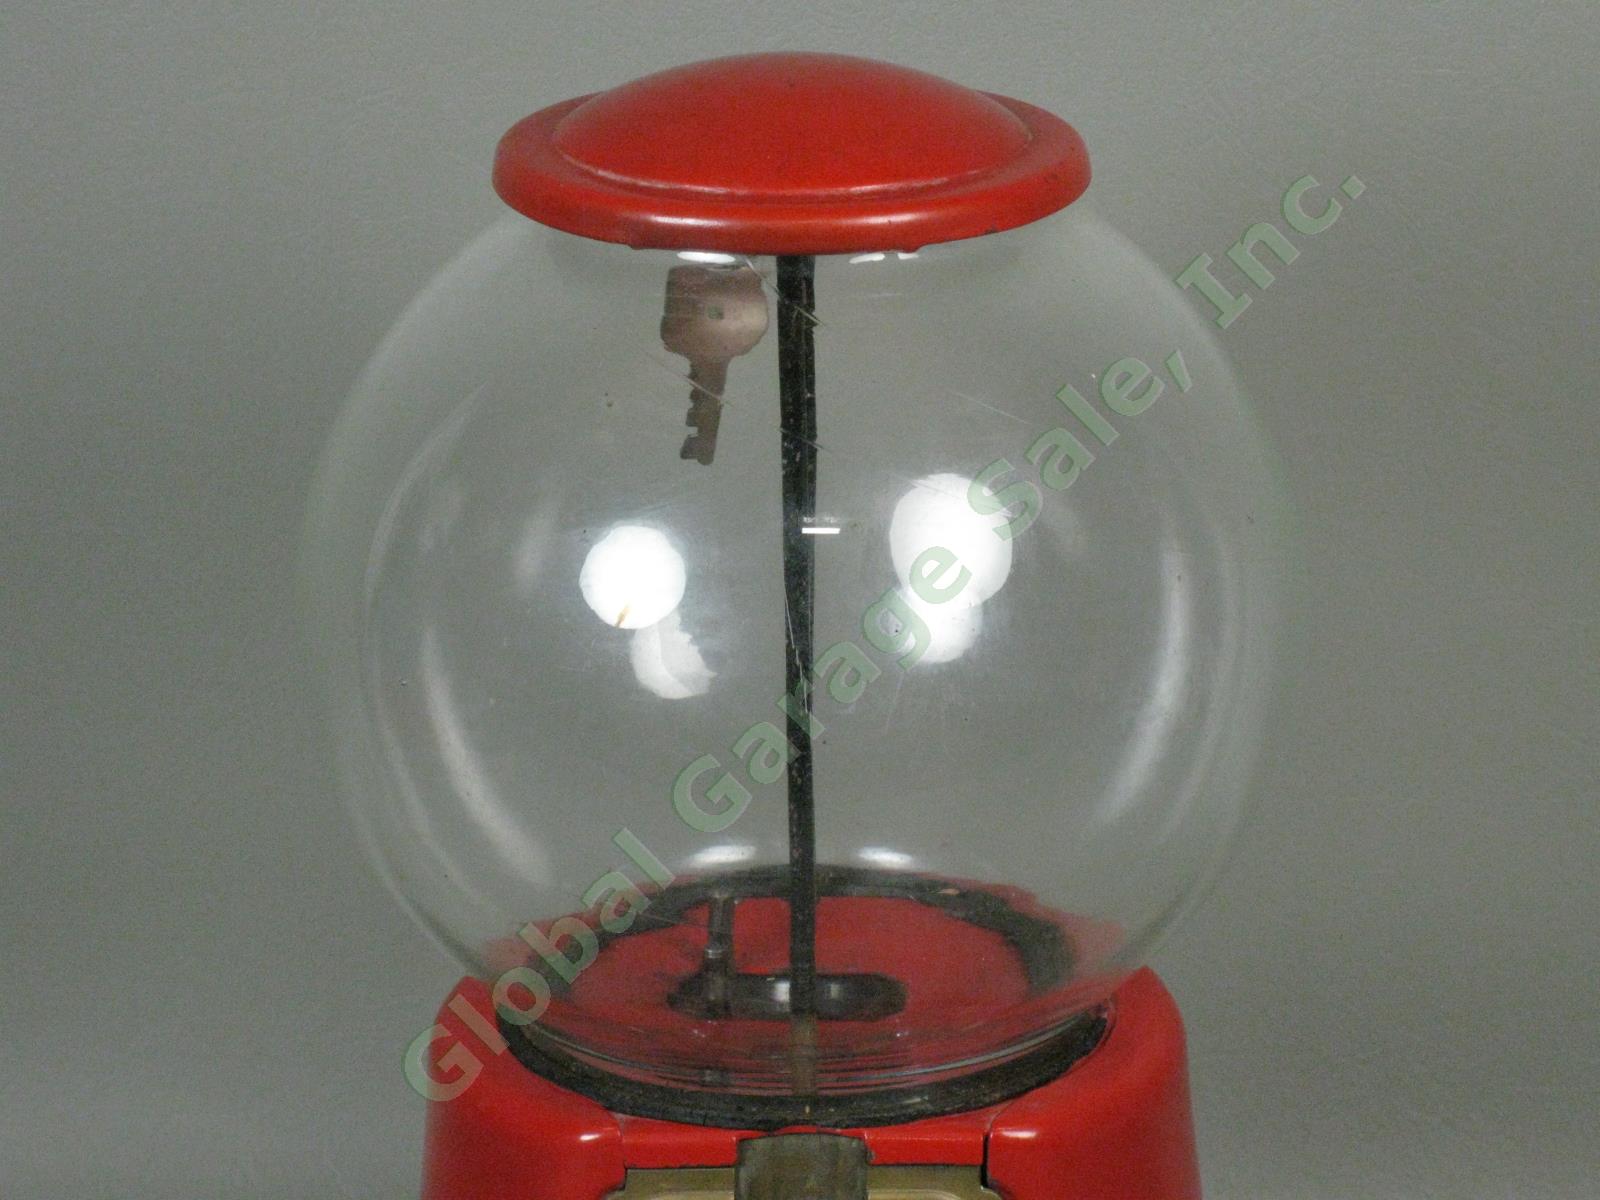 Vtg Antique Advance Gumball Machine Chicago IL Patent 1923 w/Globe + Key Works! 1